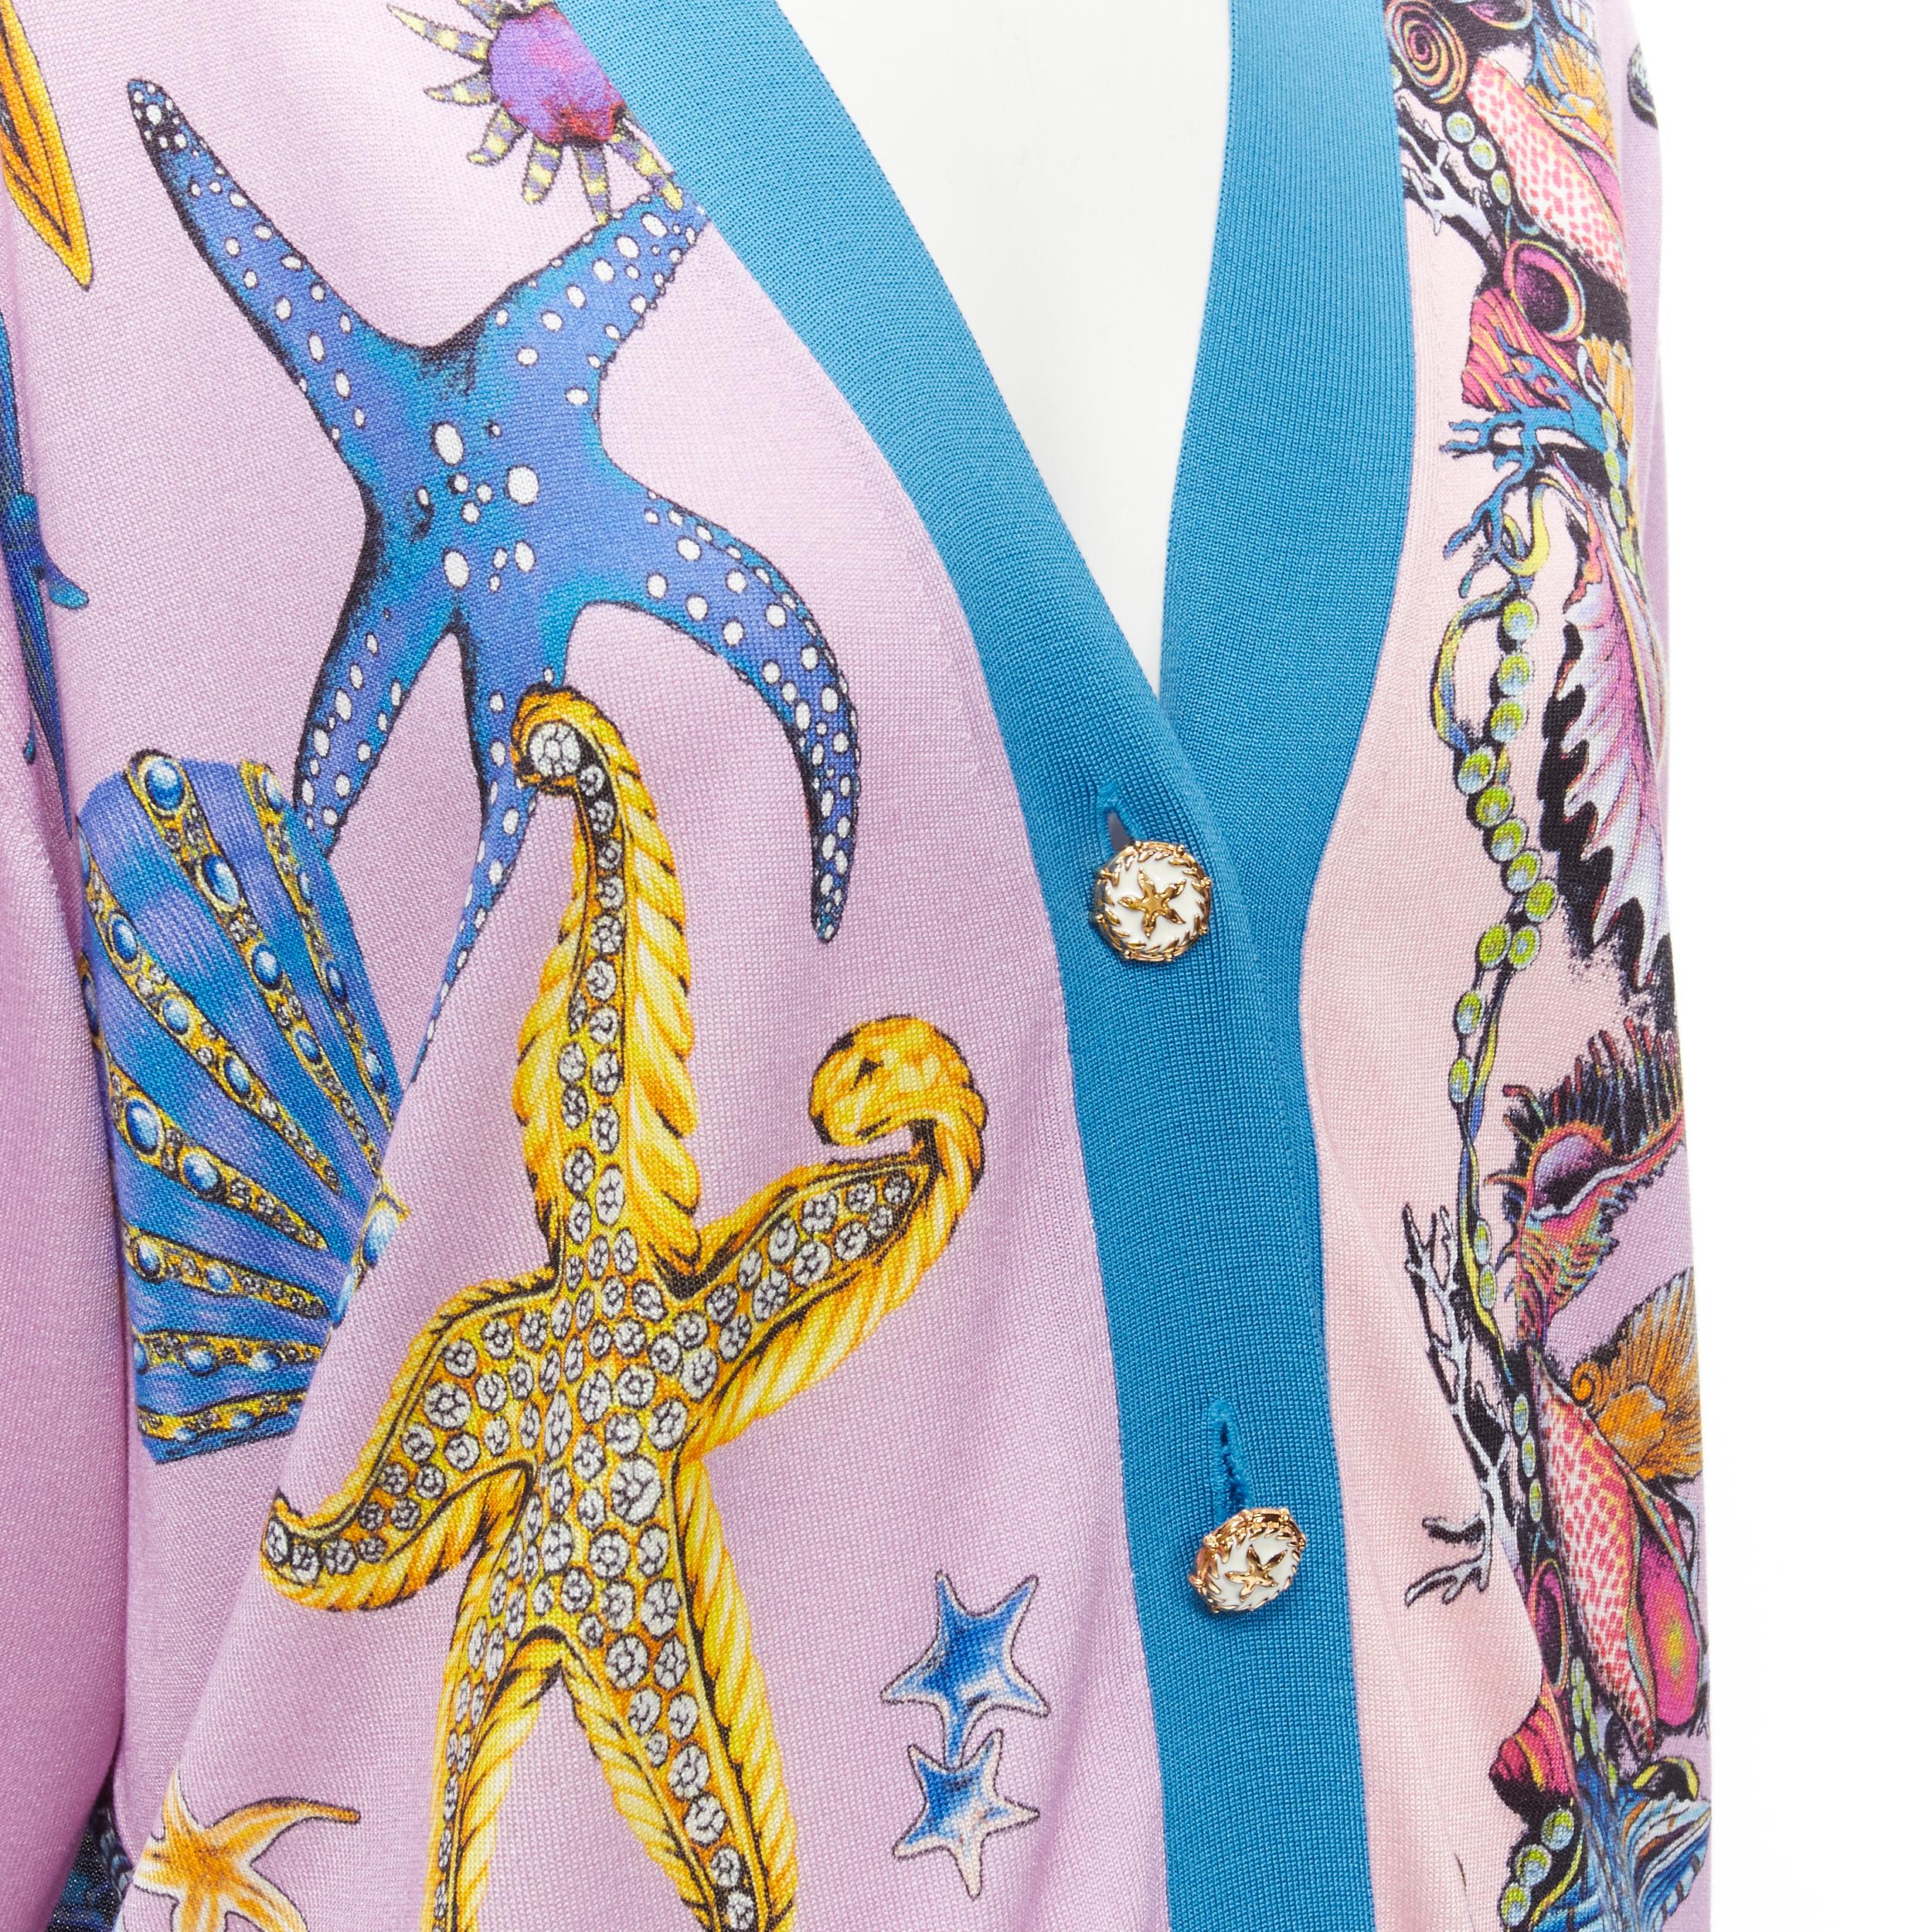 new VERSACE 2021 Tresor De La Mer pink starfish knit cardigan top IT44 L
Reference: TGAS/C01845
Brand: Versace
Designer: Donatella Versace
Model: A89295 A237537 5V010
Collection: 2021 Tresor De La Mer
Material: Silk
Color: Pink, Purple
Pattern: